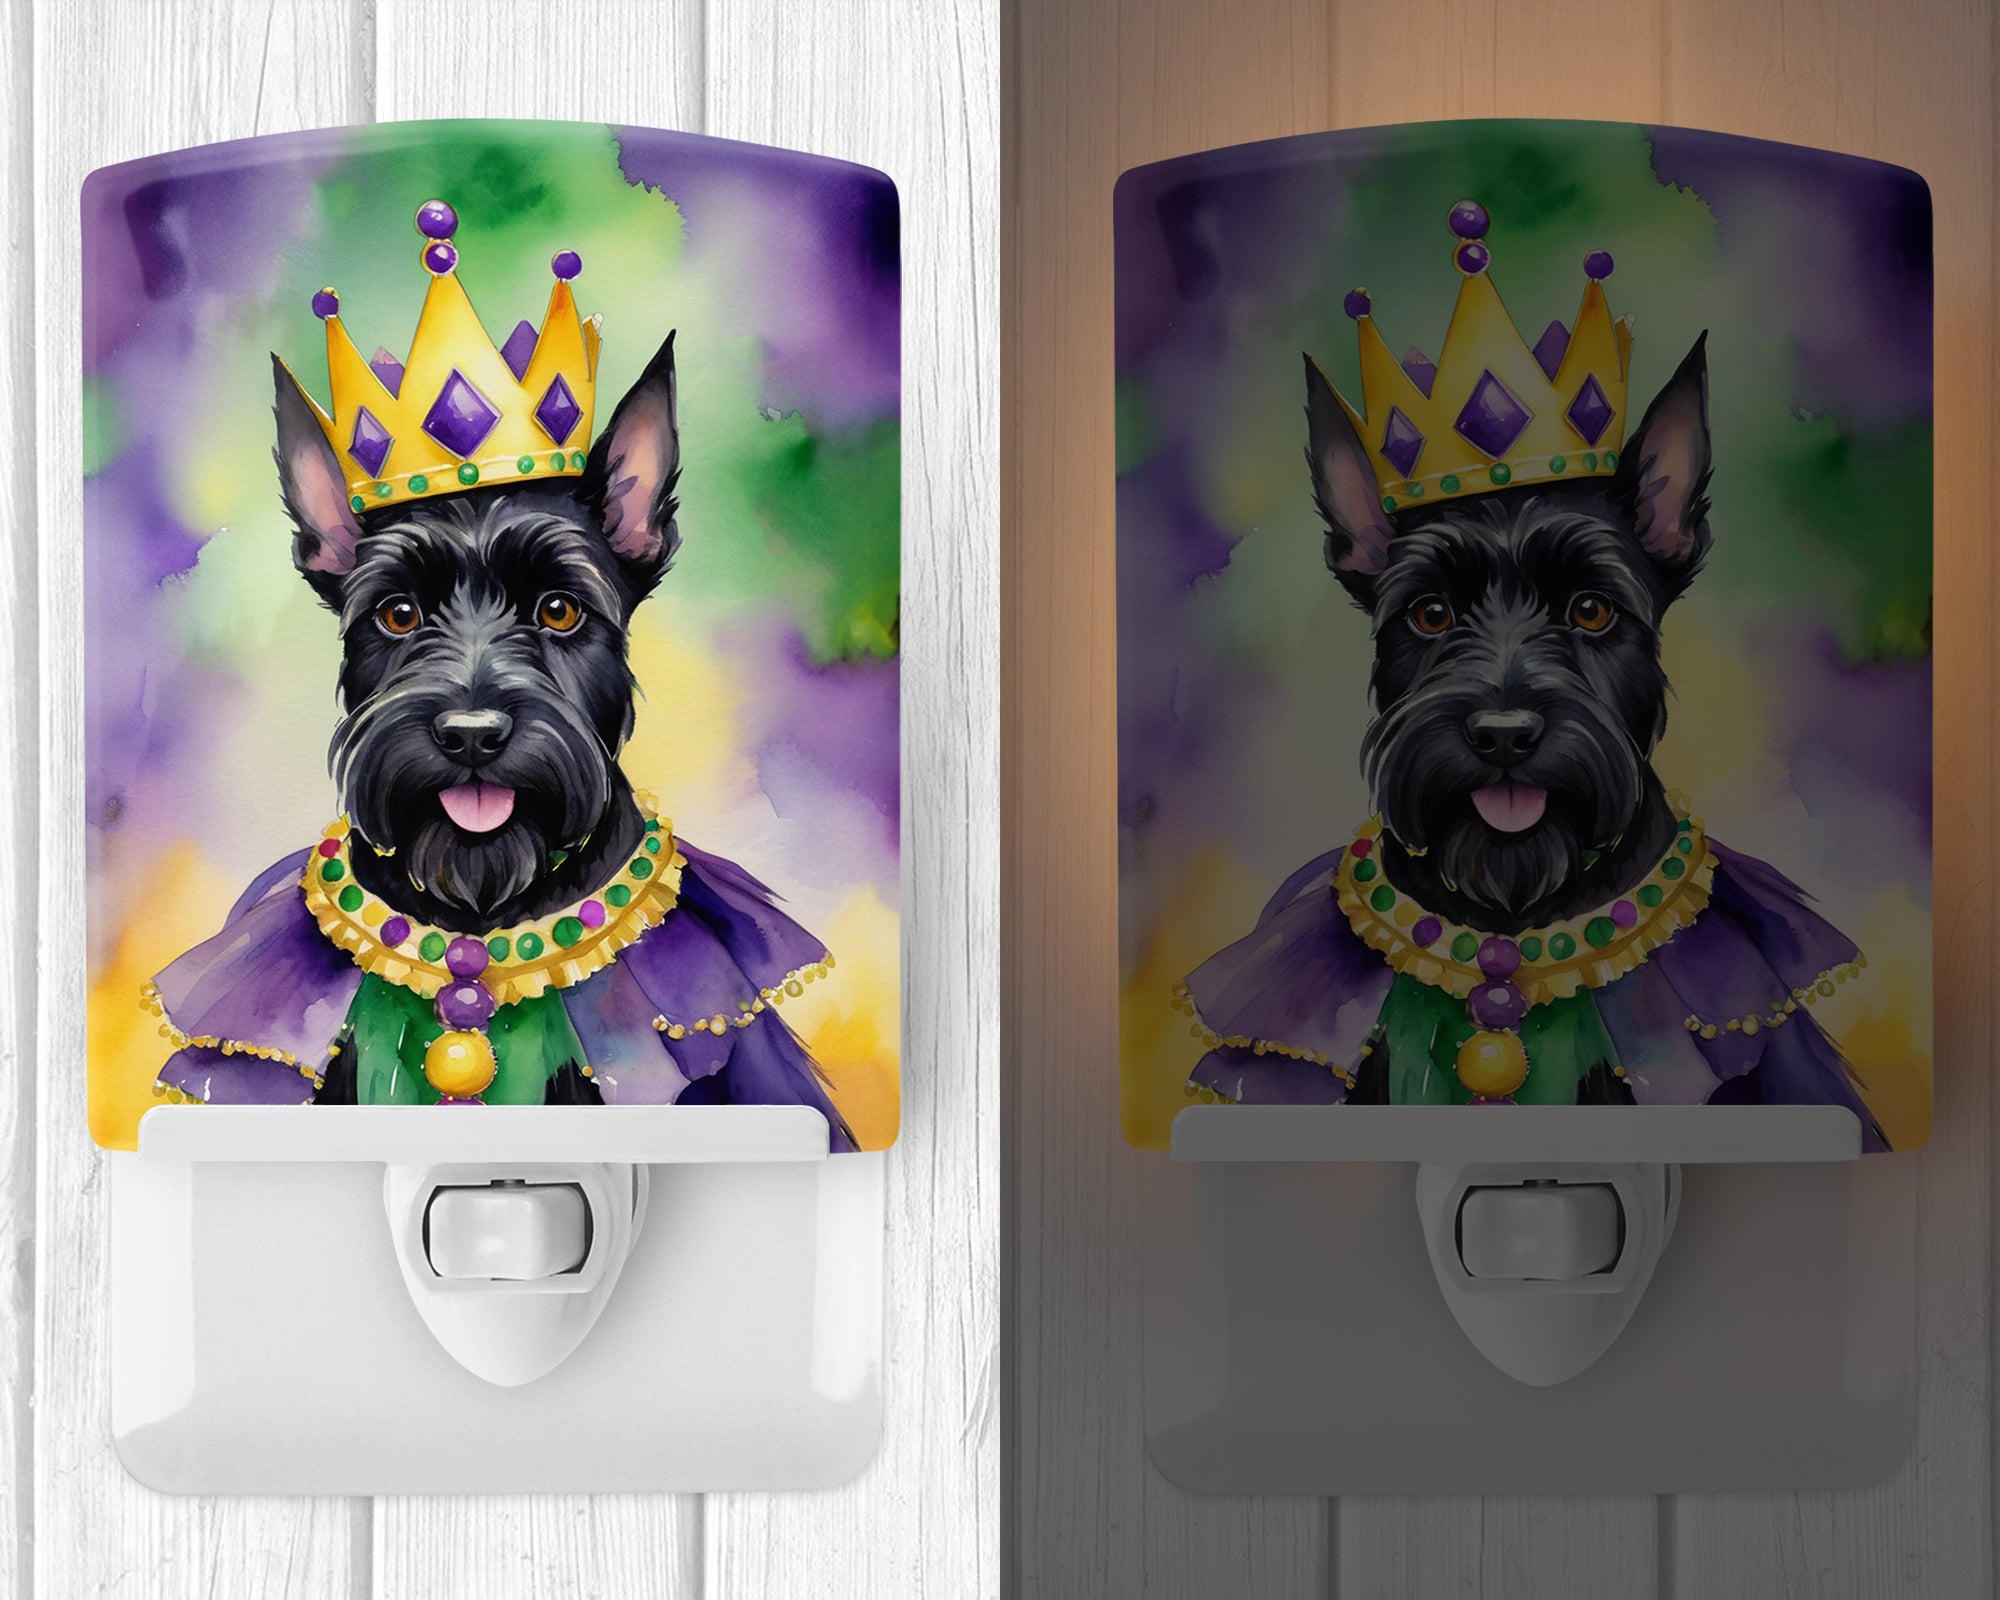 Buy this Scottish Terrier King of Mardi Gras Ceramic Night Light